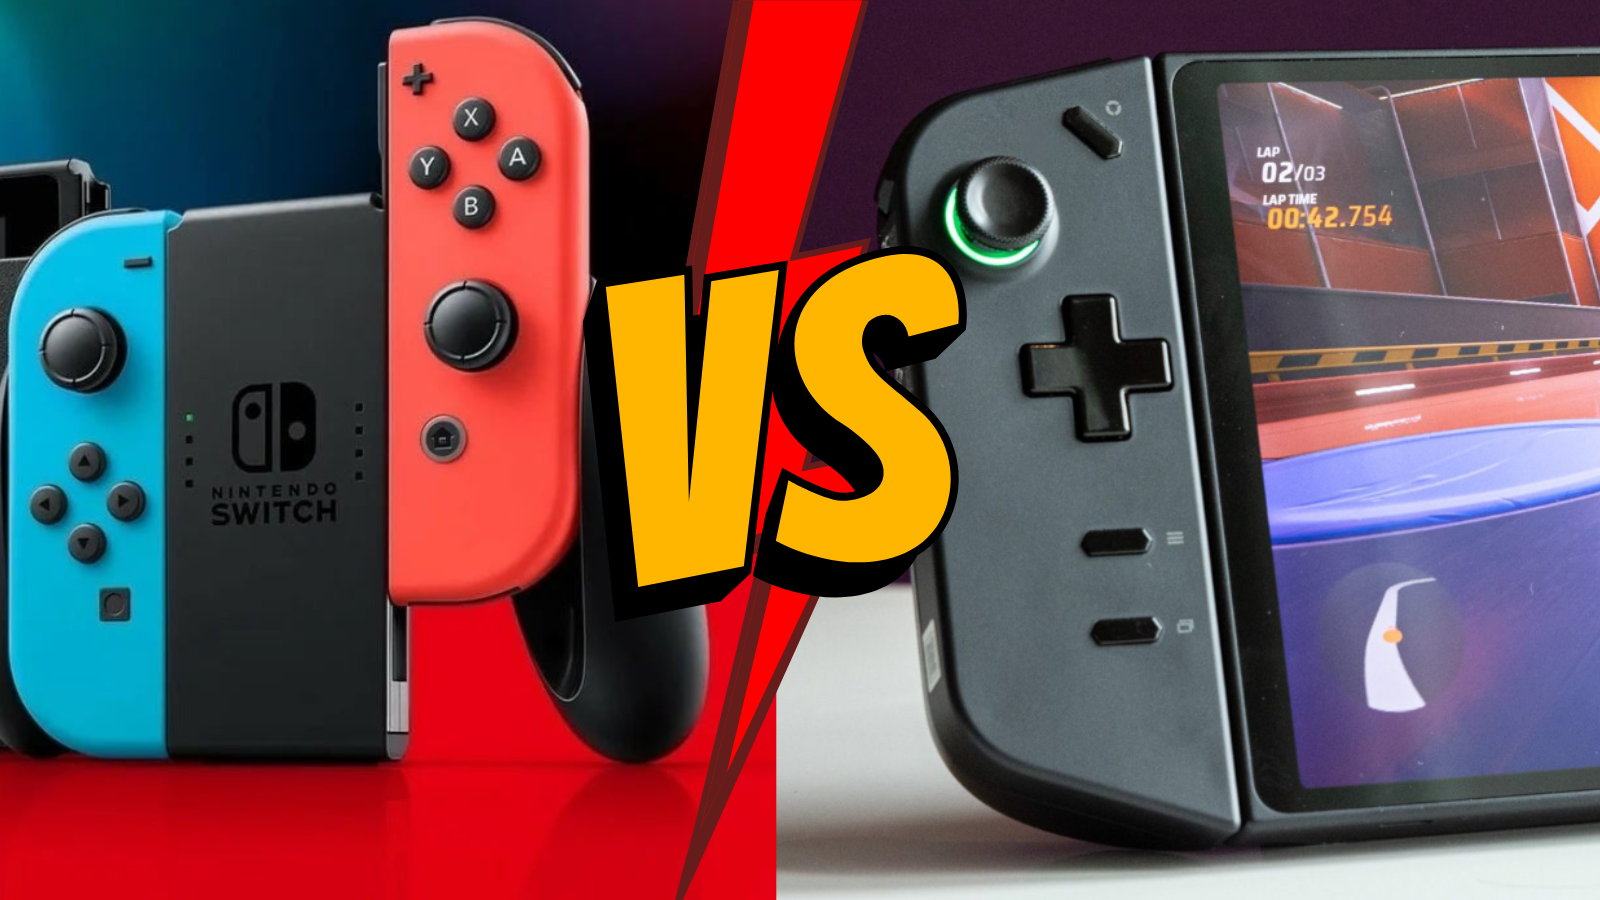 Legion Go VS Nintendo Switch Comparison. Which One is Better?